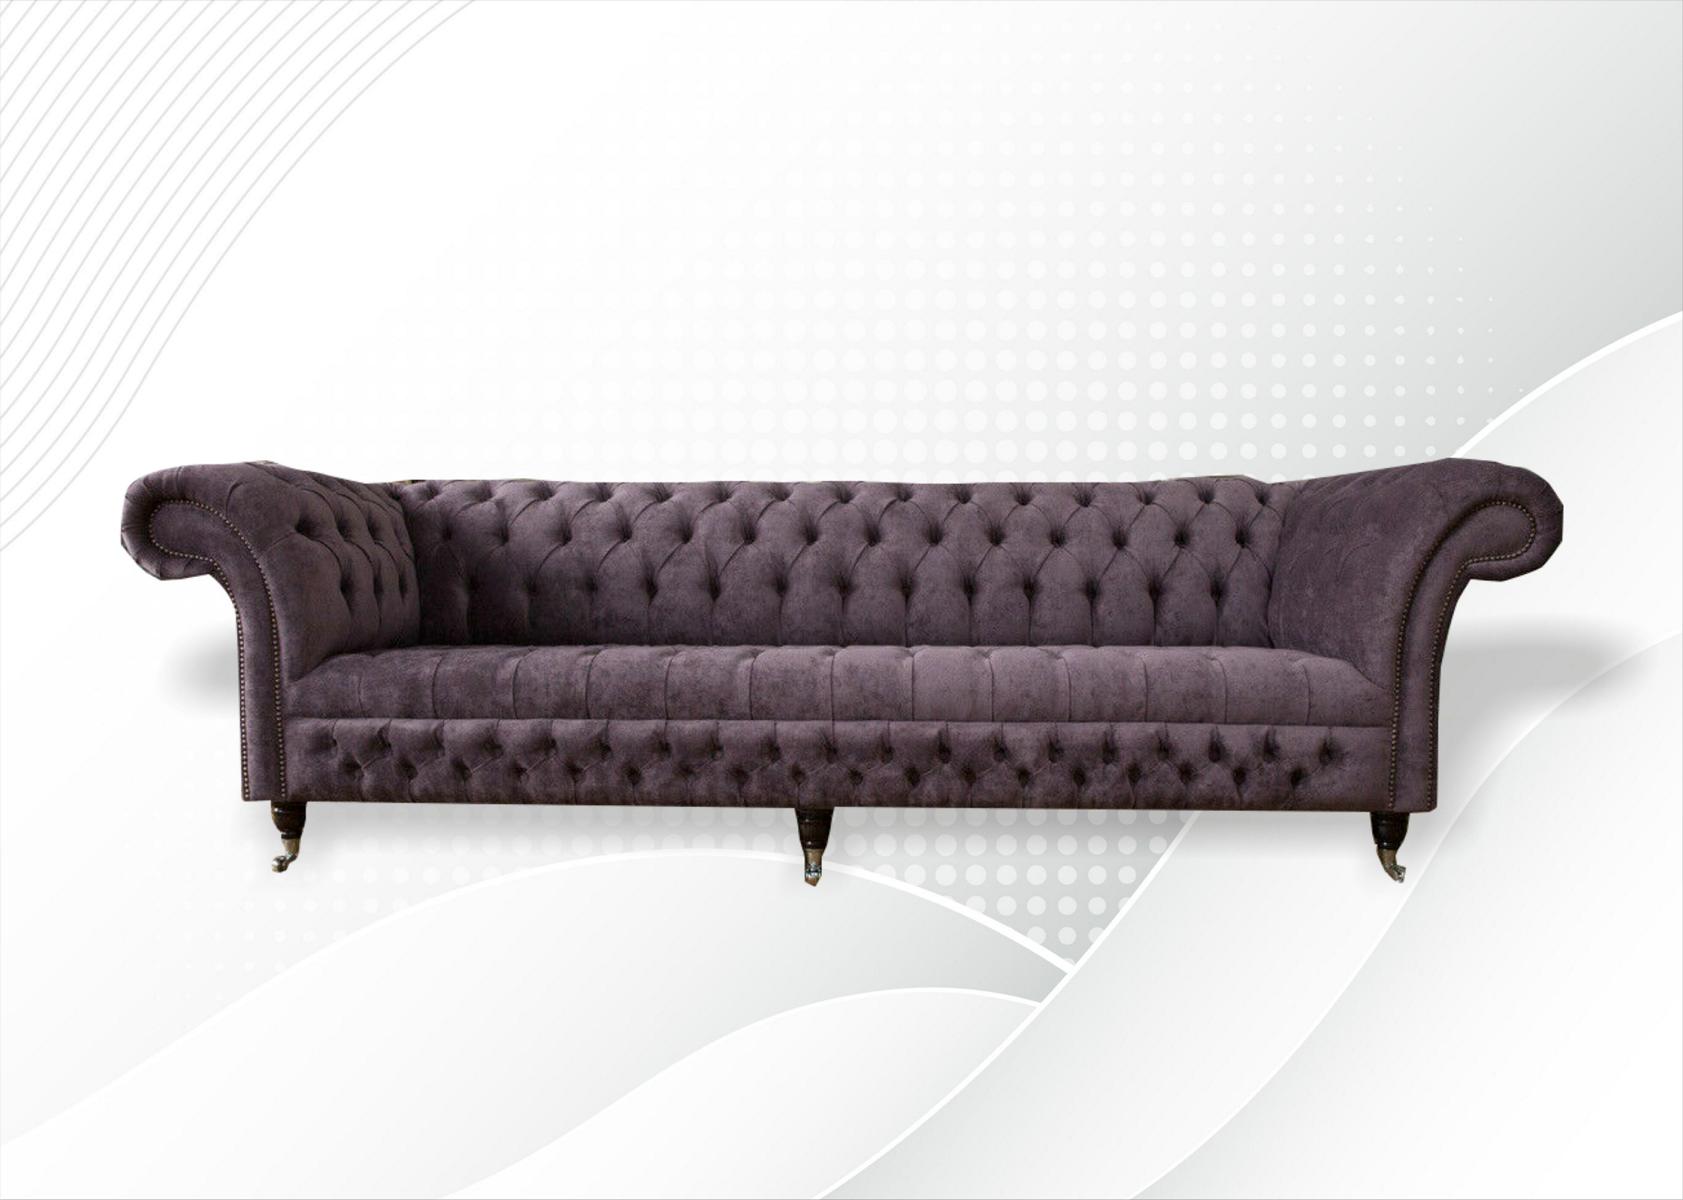 xxl Big Sofa Couch Chesterfield 265cm Polster Sofas 4 Sitzer Leder